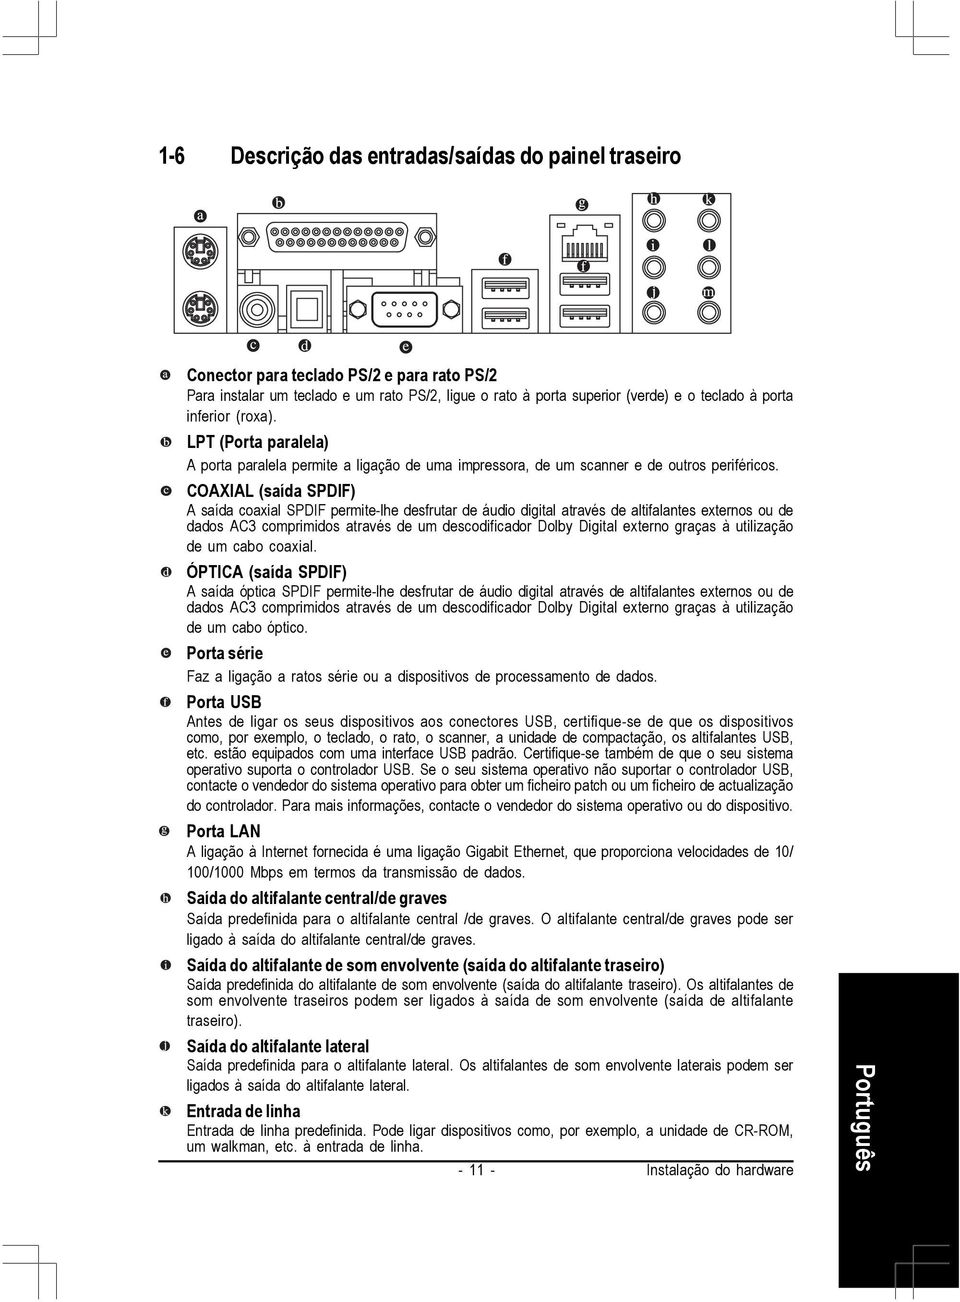 COAXIAL (saída SPDIF) A saída coaxial SPDIF permite-lhe desfrutar de áudio digital através de altifalantes externos ou de dados AC3 comprimidos através de um descodificador Dolby Digital externo